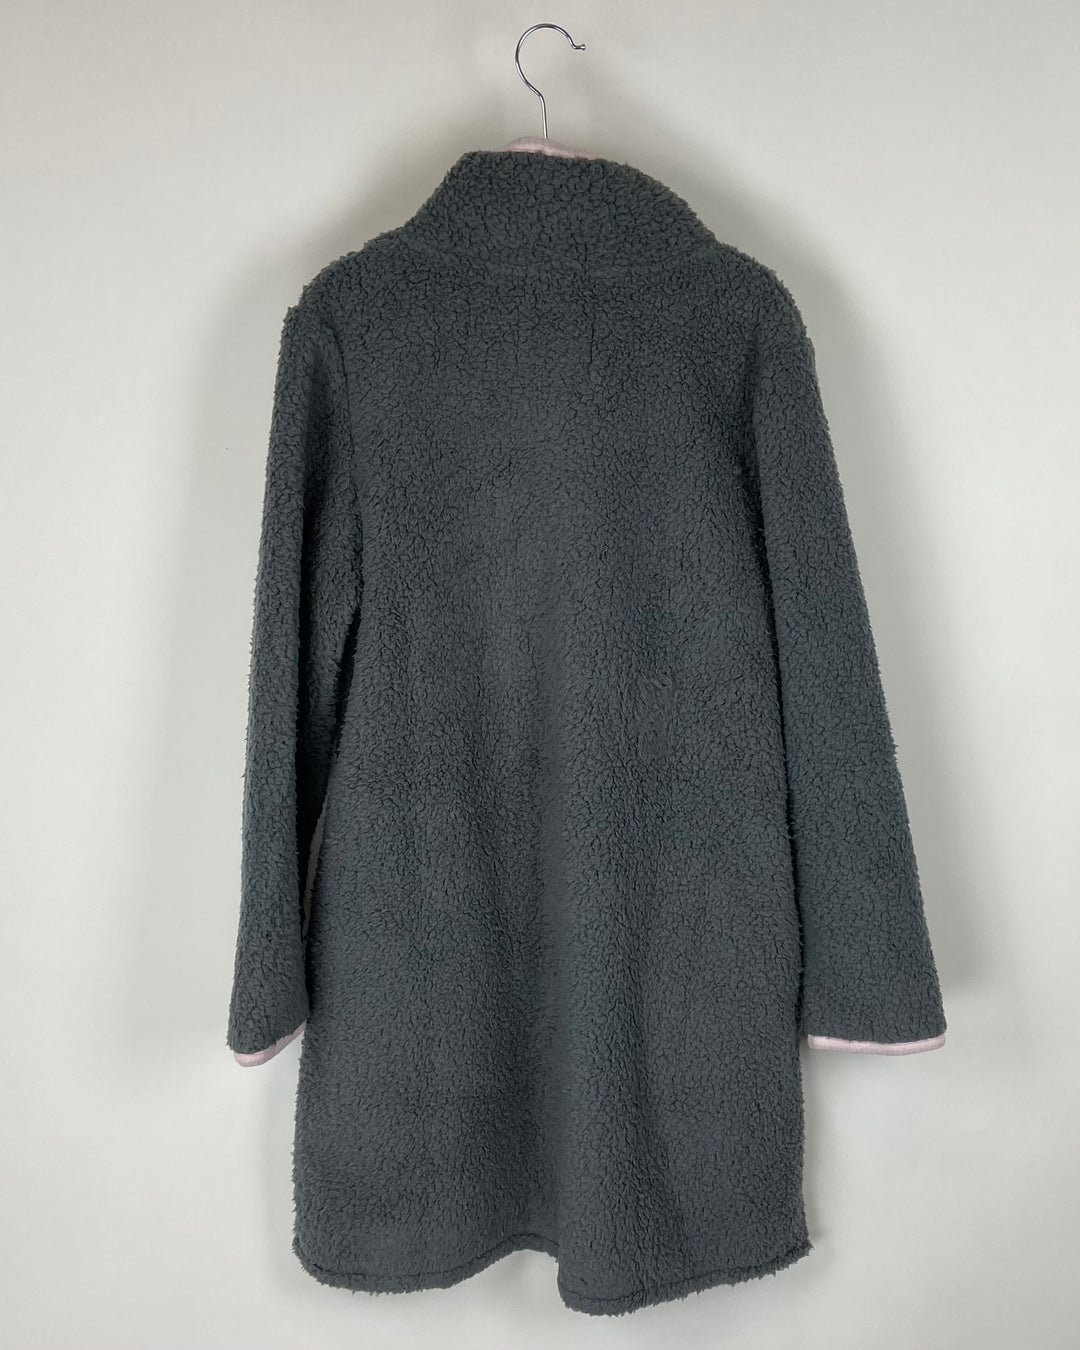 Grey Fleece Top - Size 6-8